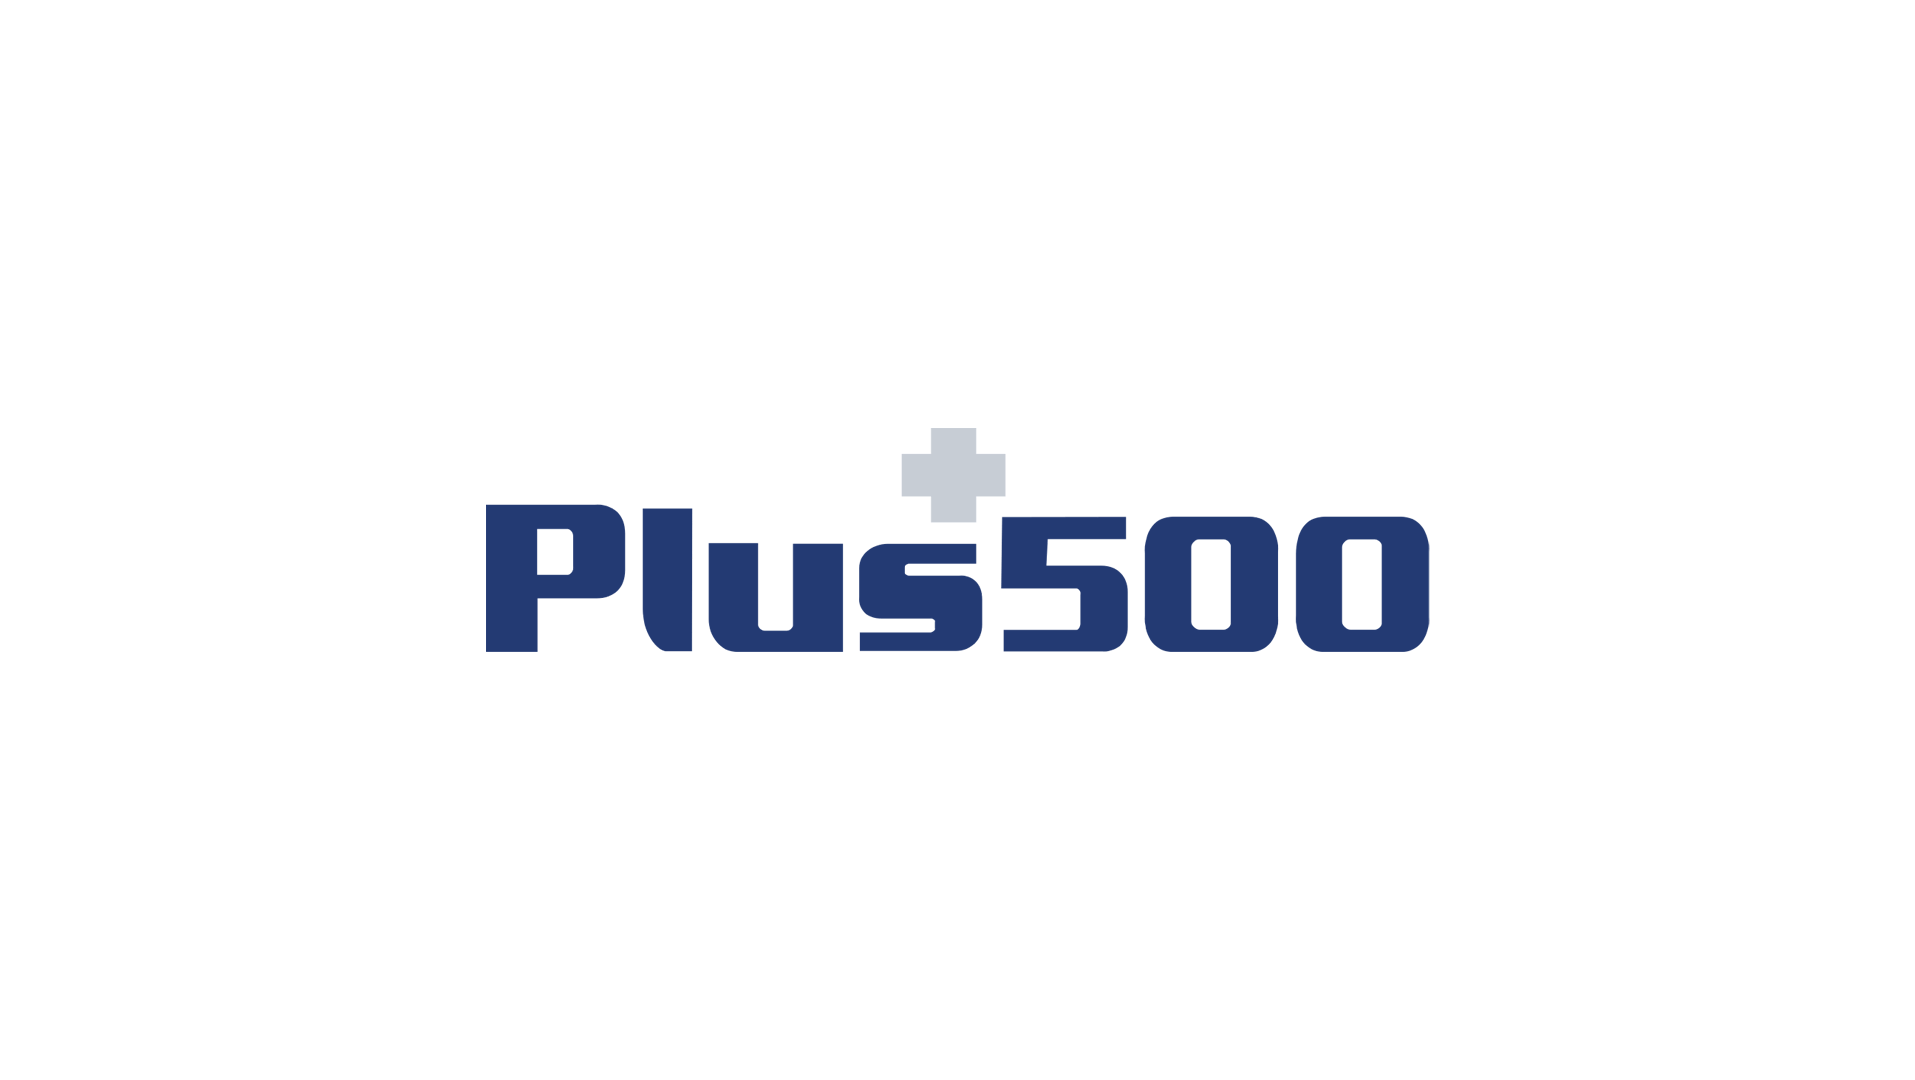 Plus500 Review